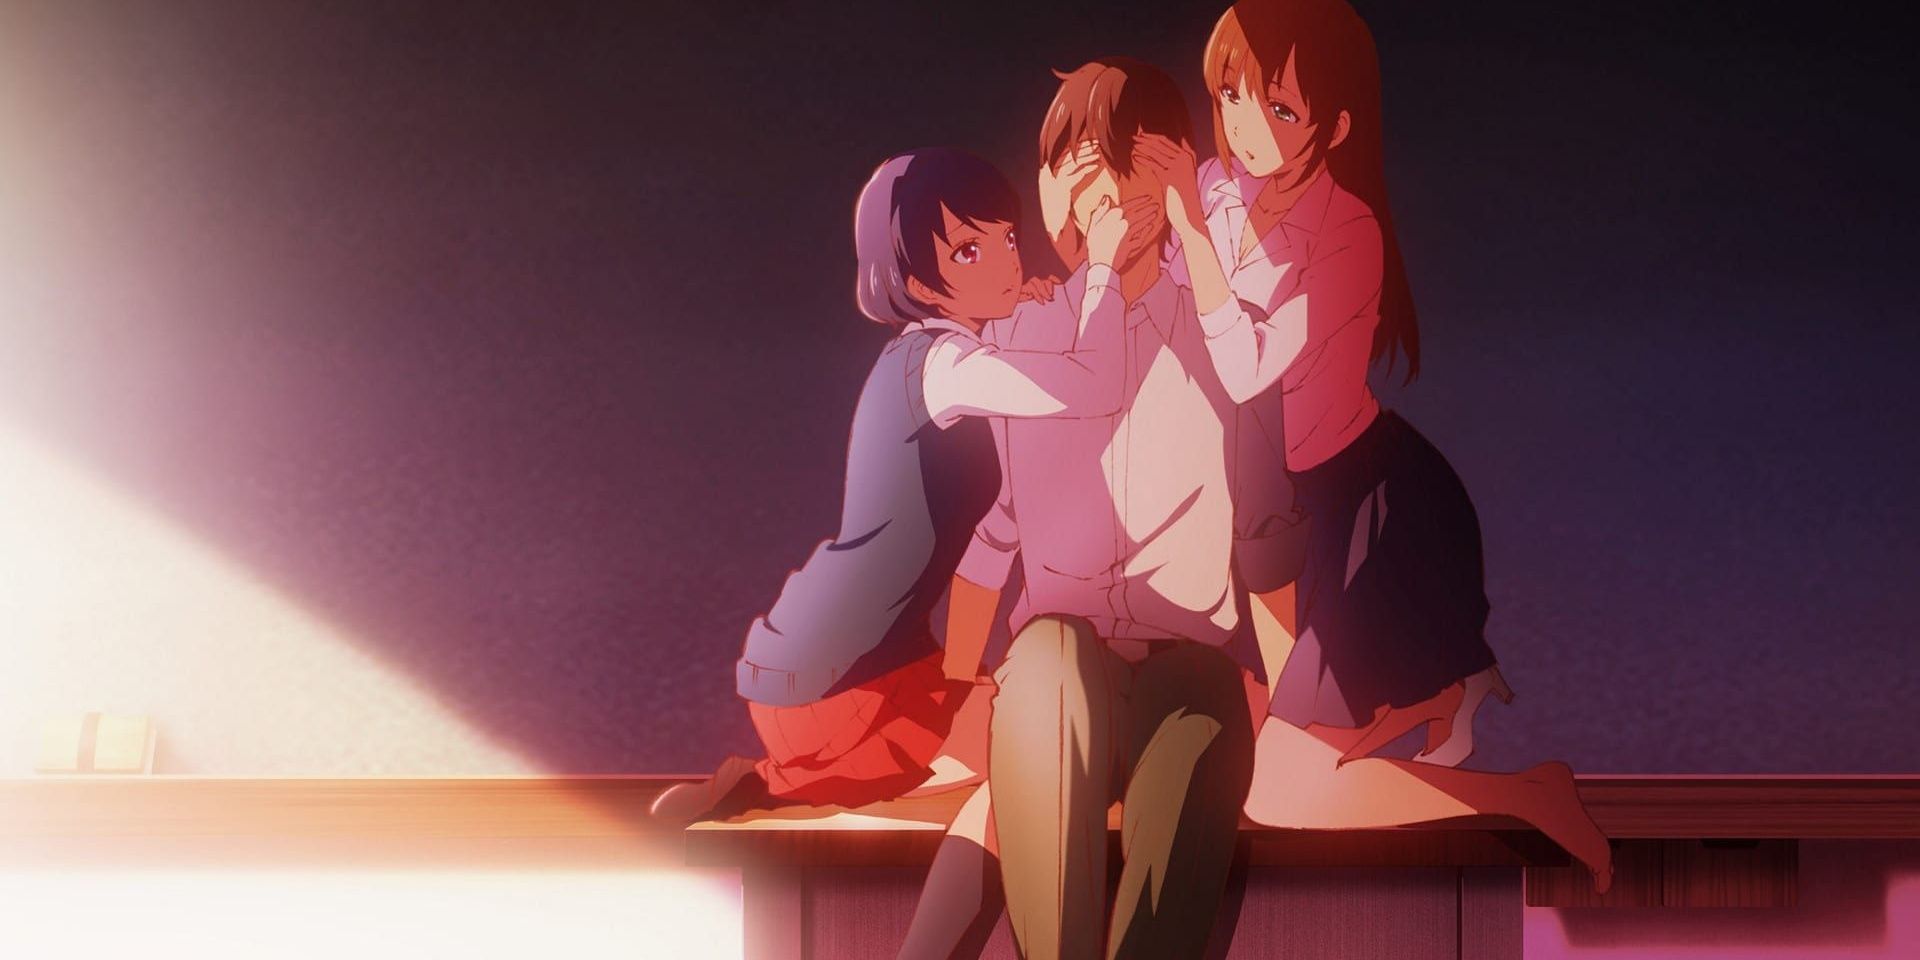 Natsuo caught in love triangle between Rui (left) & his teacher Hina (right) in Domestic Girlfriend.